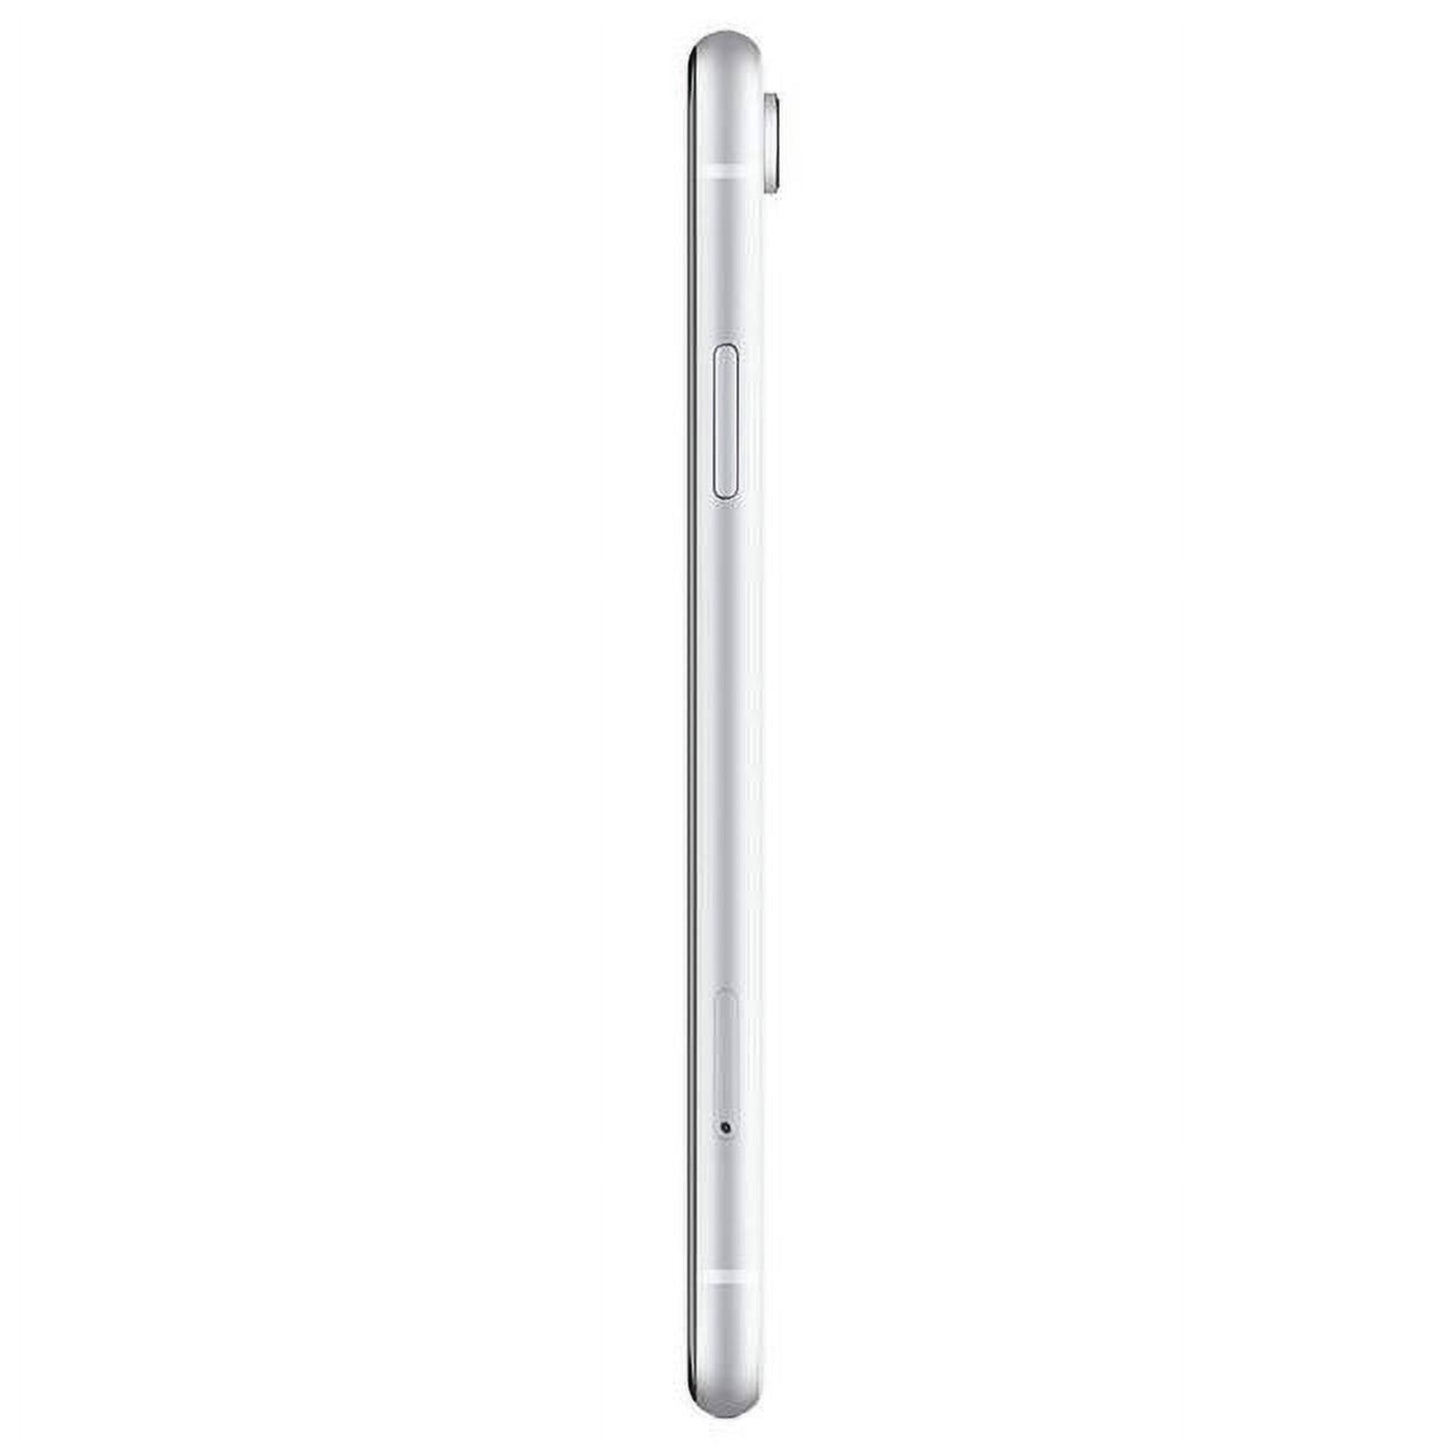 iPhone XR Blanco 256 GB (Libre) Usado